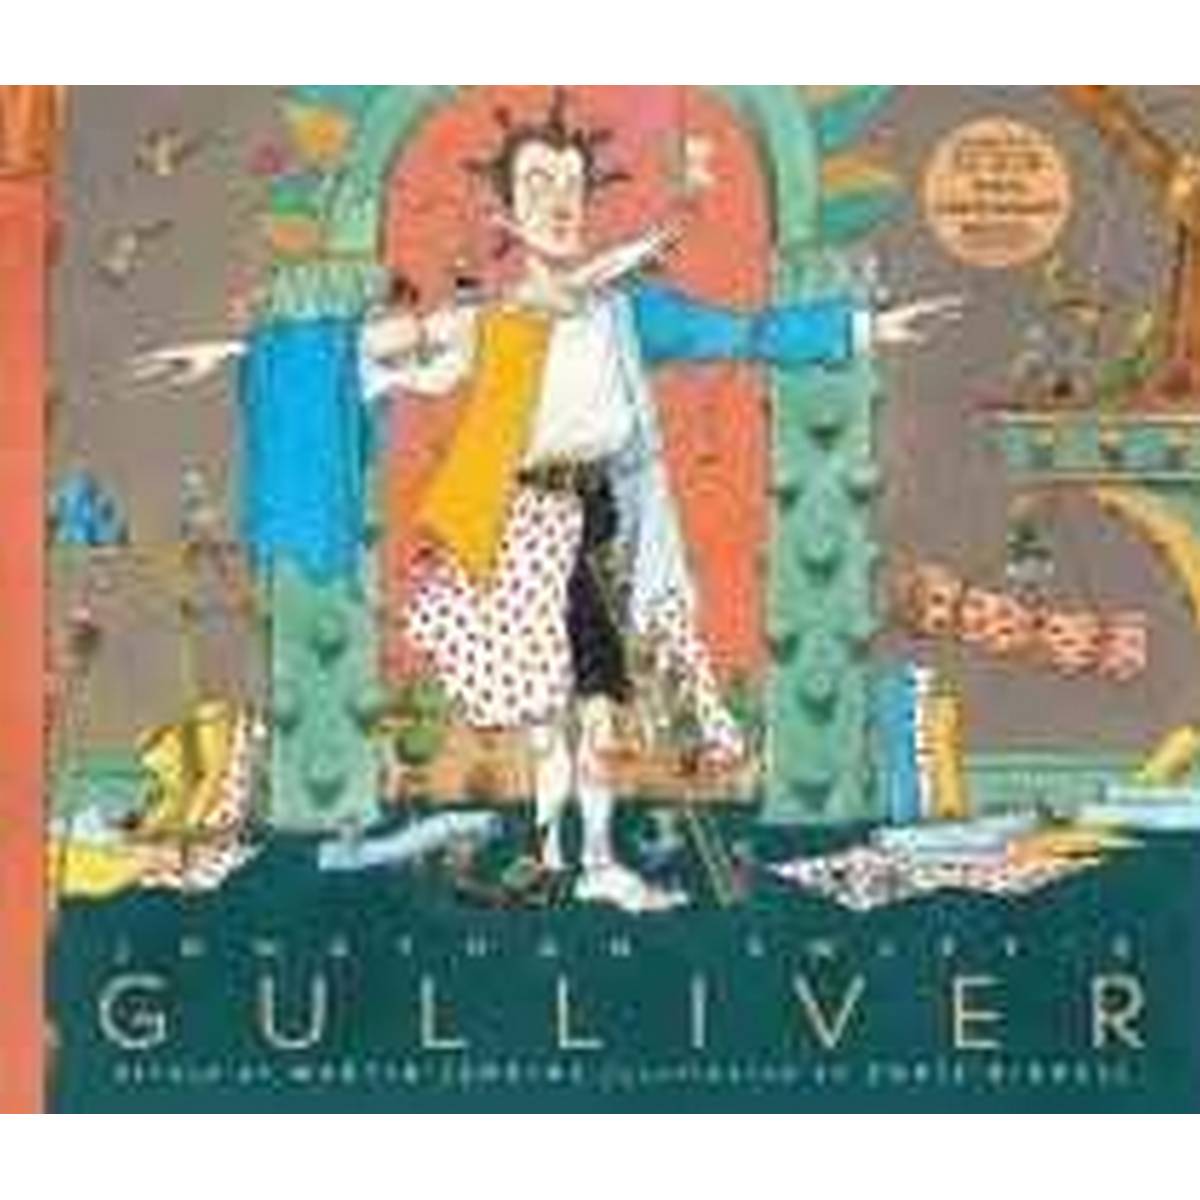 Jonathan Swift's "Gulliver" Illustrated